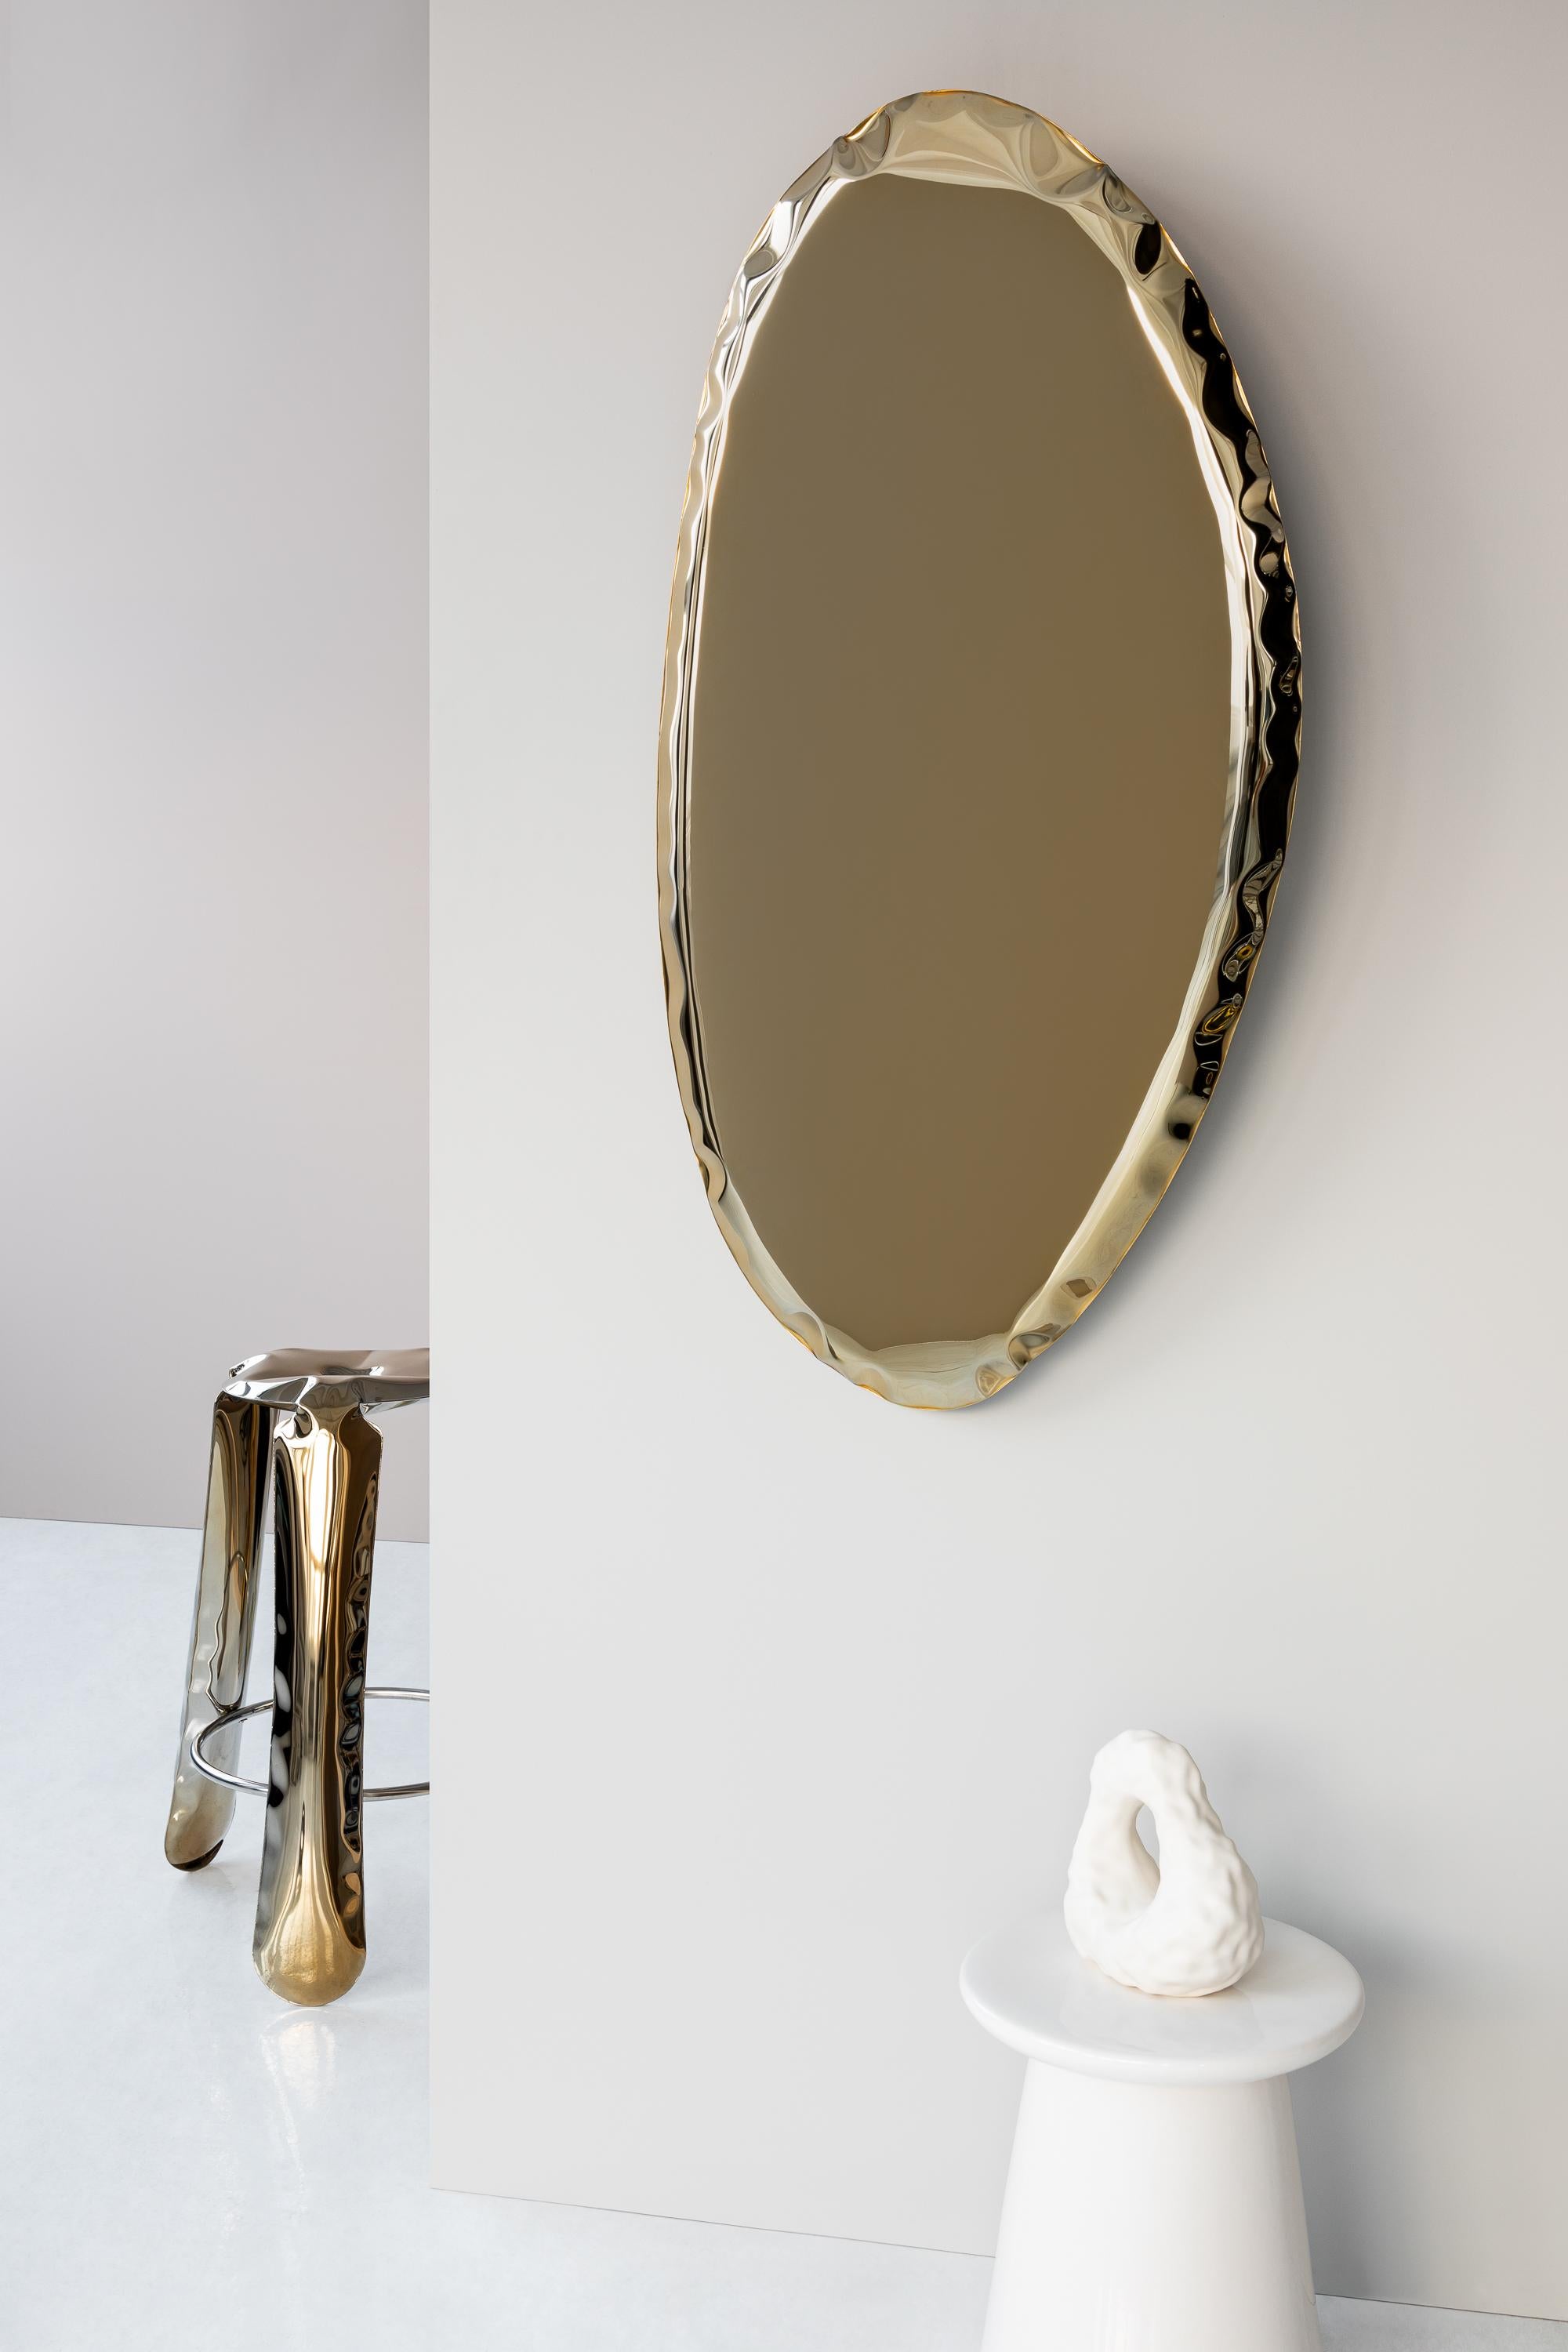 Polish Light Gold Tafla O2 Wall Mirror by Zieta For Sale